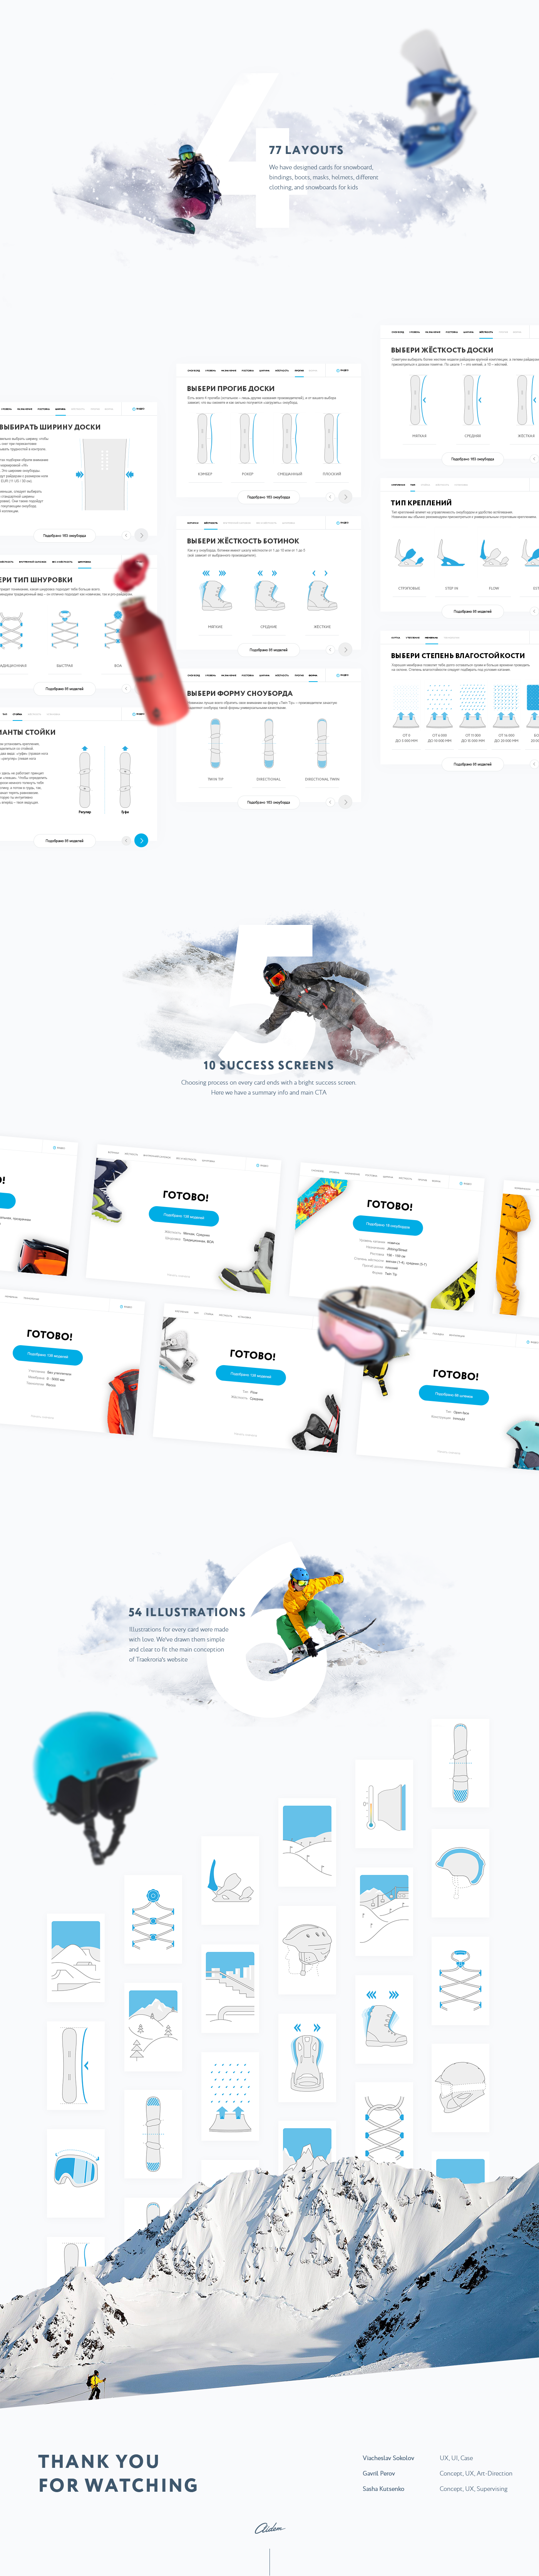 service Snowboarding Web interaction ux UI e-commerce choosing